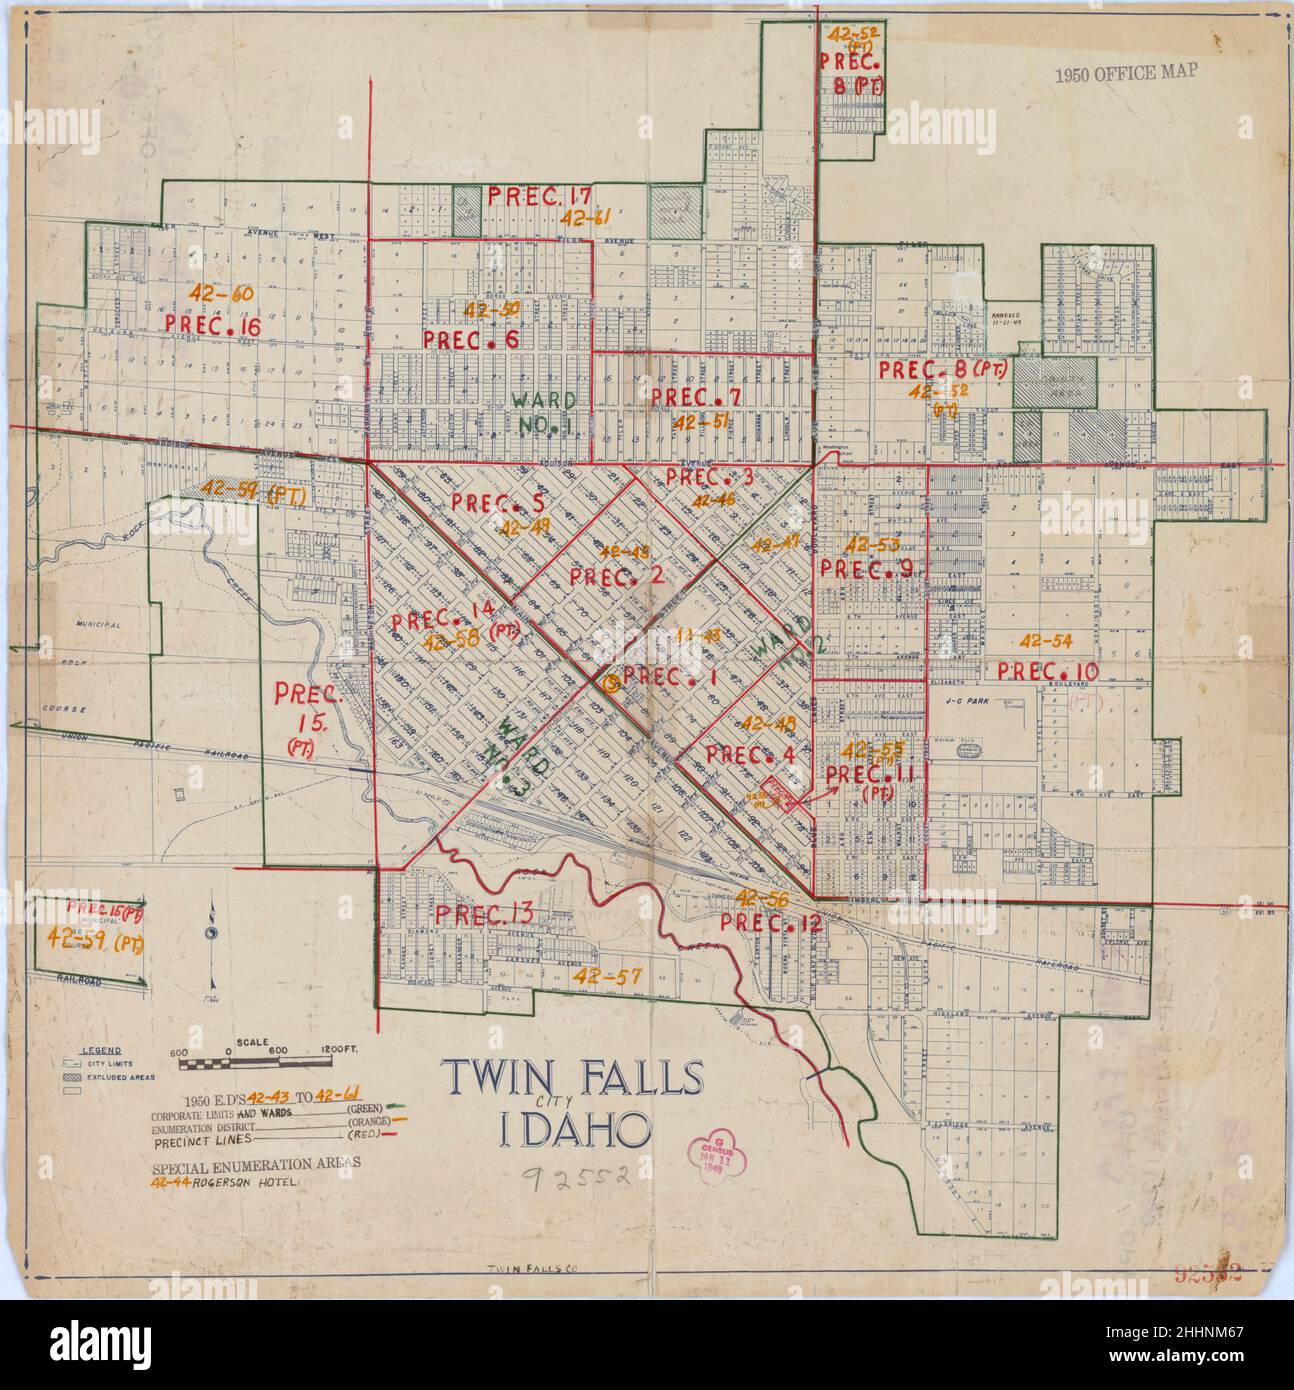 1950 Census Enumeration District Maps - Idaho (ID) - Twin Falls County - Twin Falls - ED 42-43 to 61 - DPLA - 837f5439d5c192936985c578e1f9a4cd Stock Photo